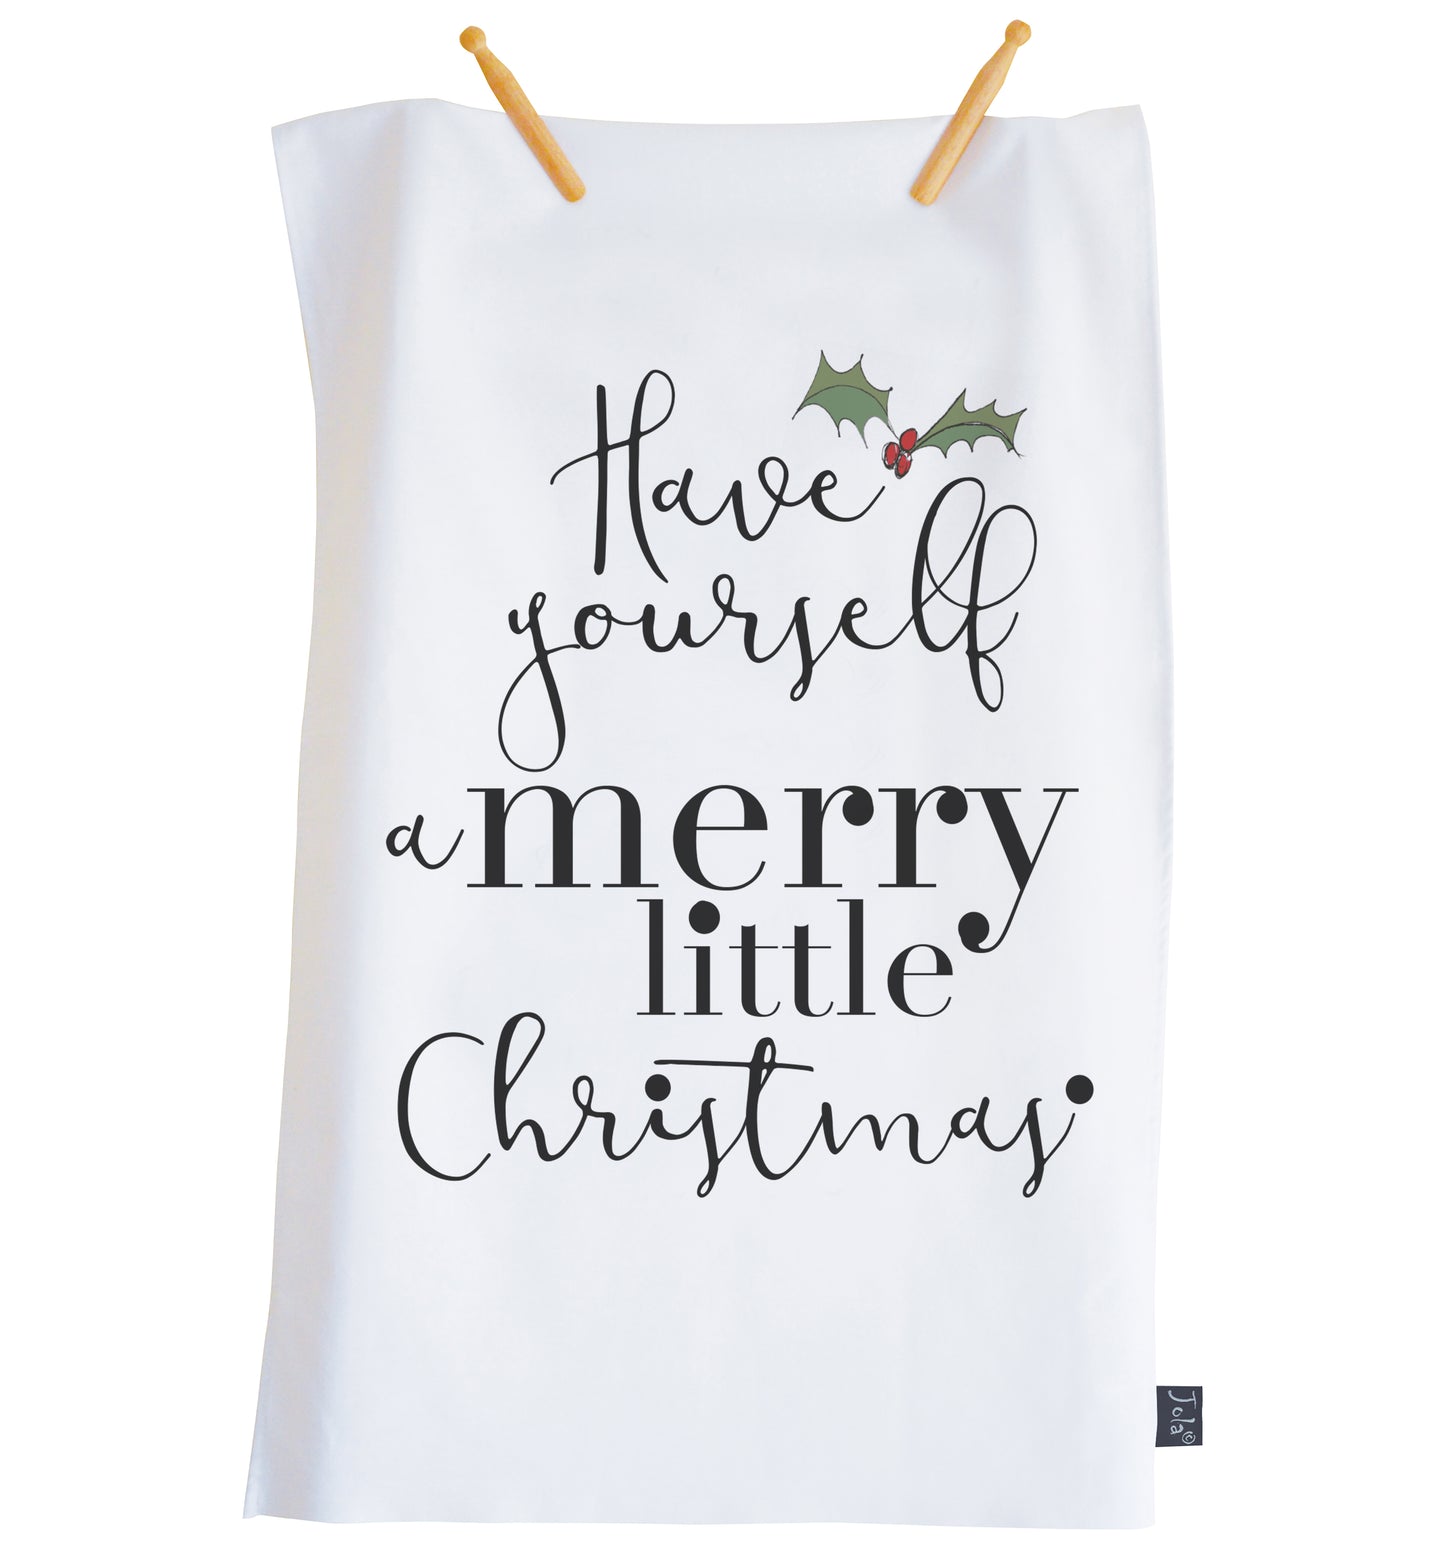 Merry Little Christmas tea towel